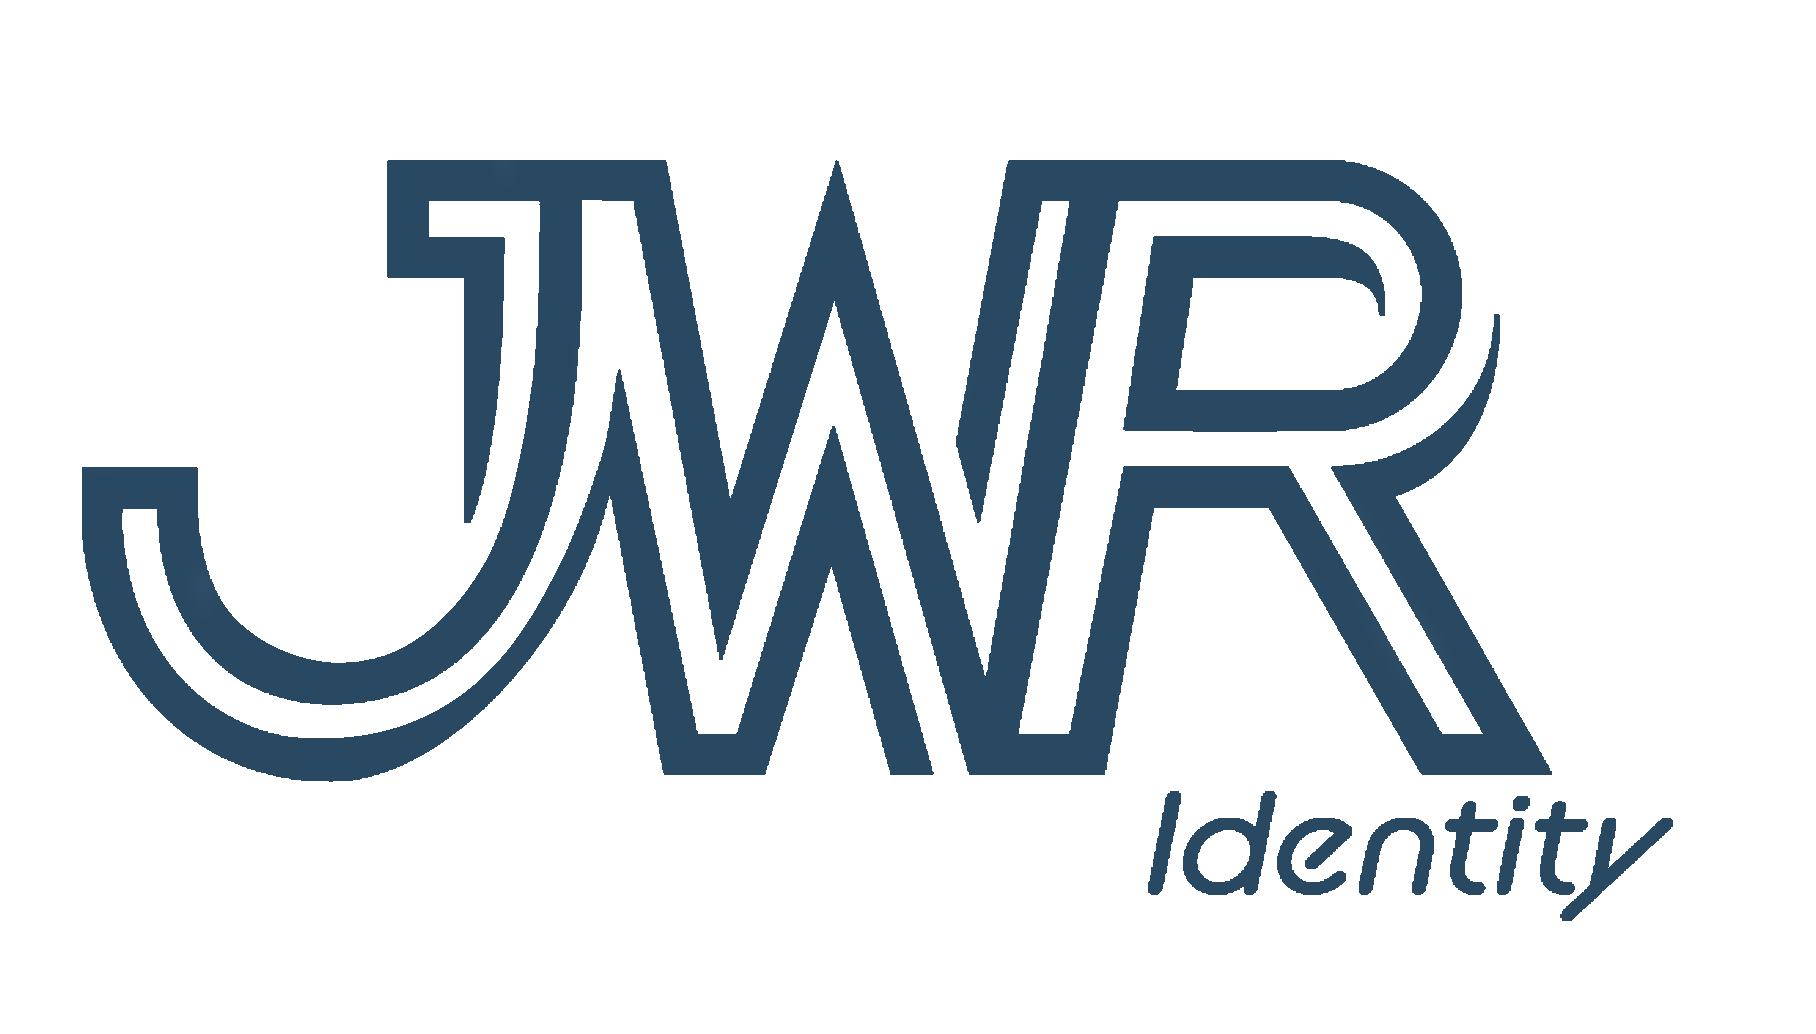 JWR Identity